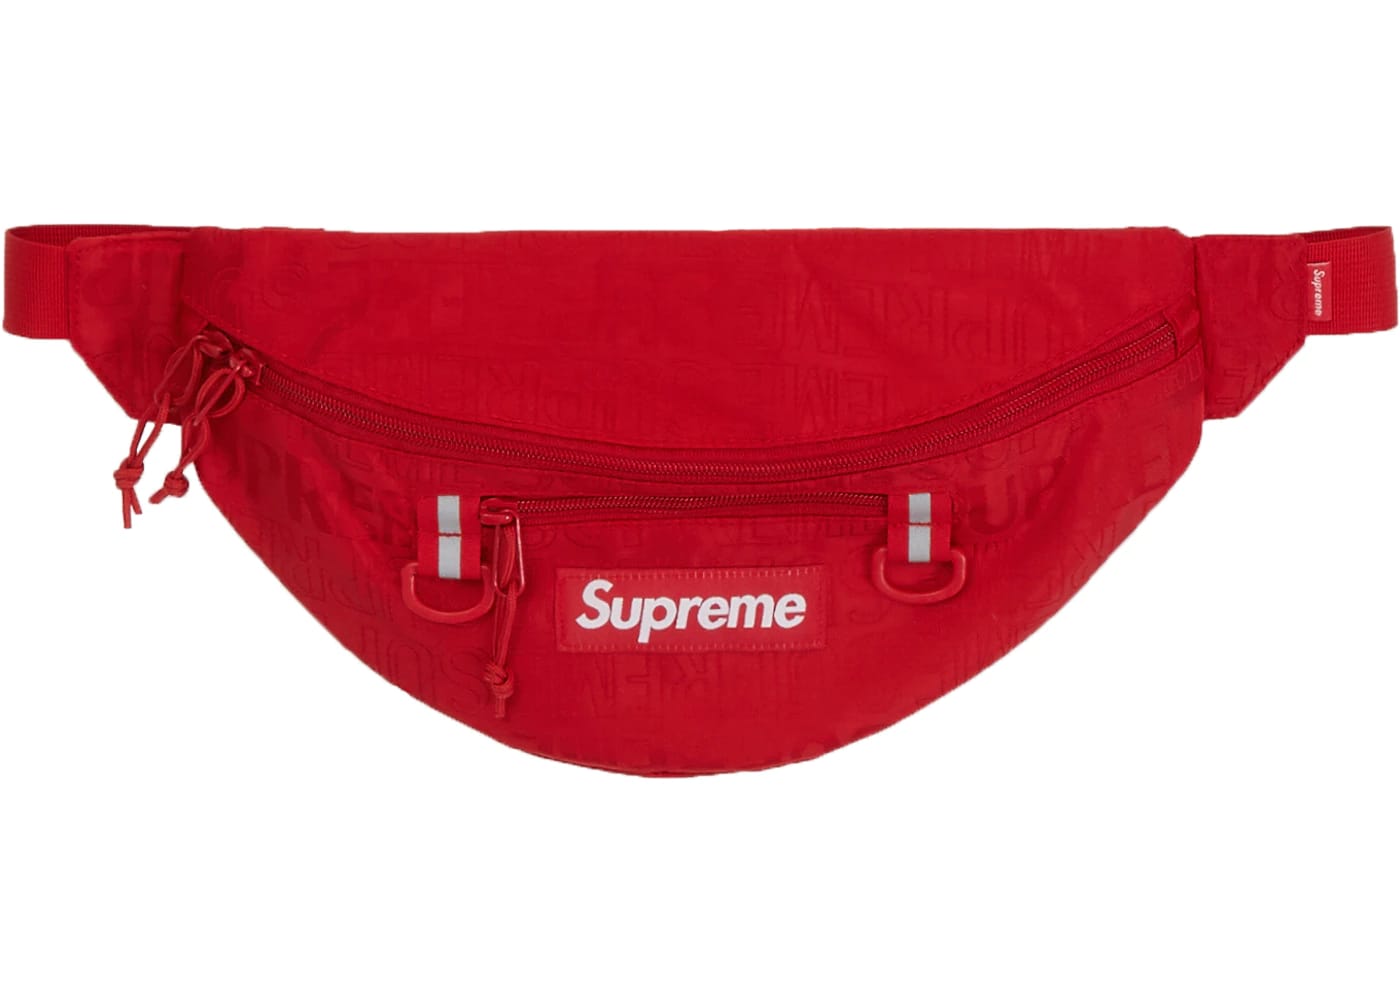 Supreme SS19 Waist Bag Red Review + Shower Cap 